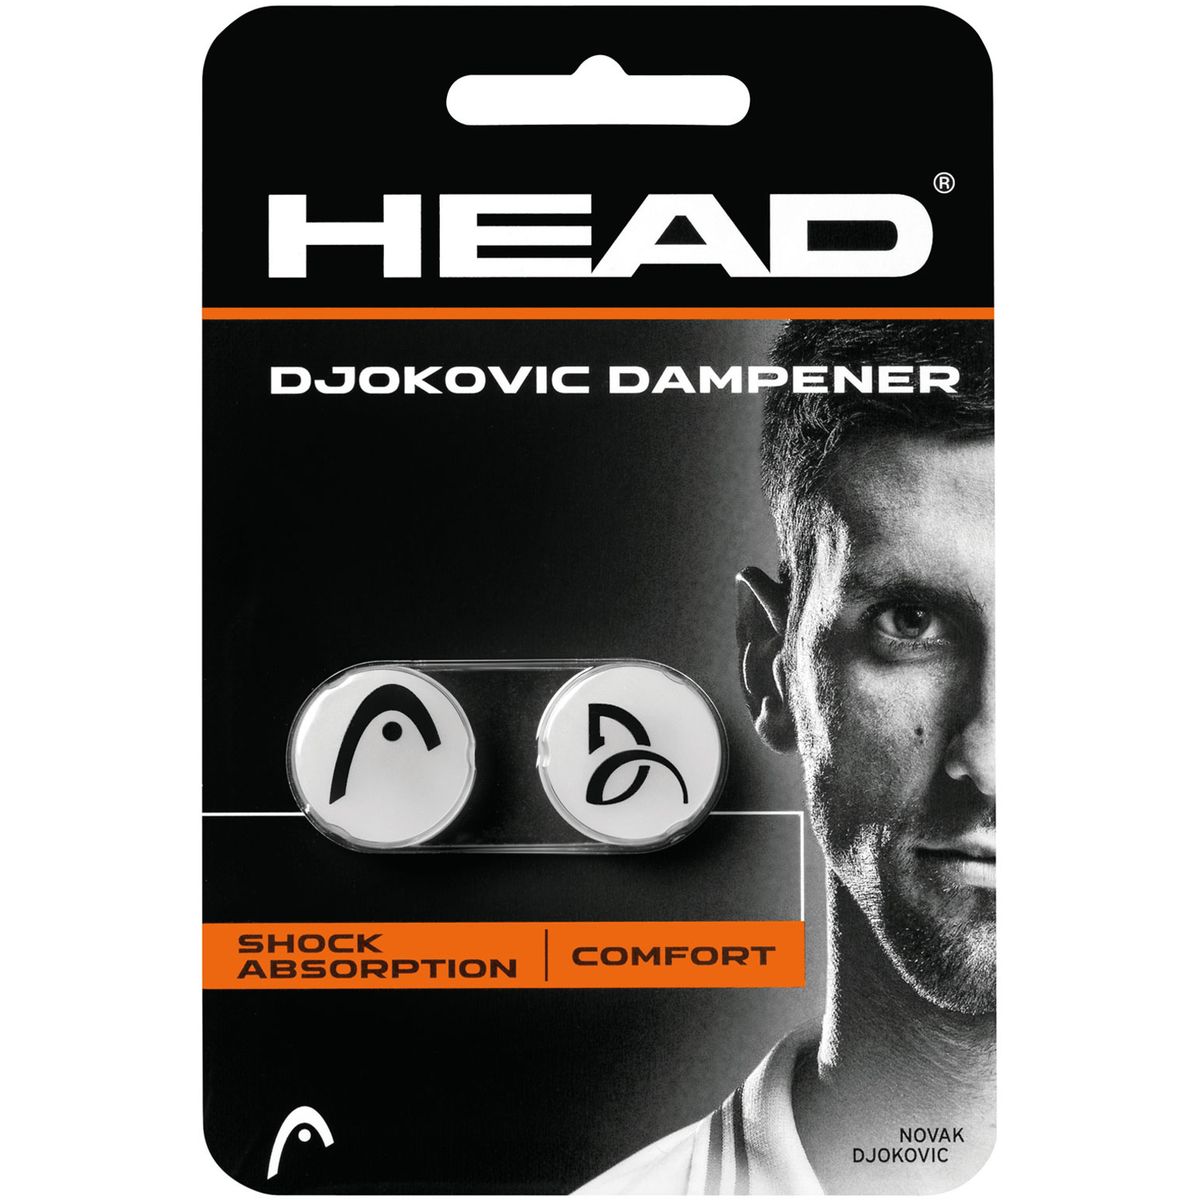 Head Djokovic Dampener 2 Pcs Pack attopt_internal_category_online_shop_124960